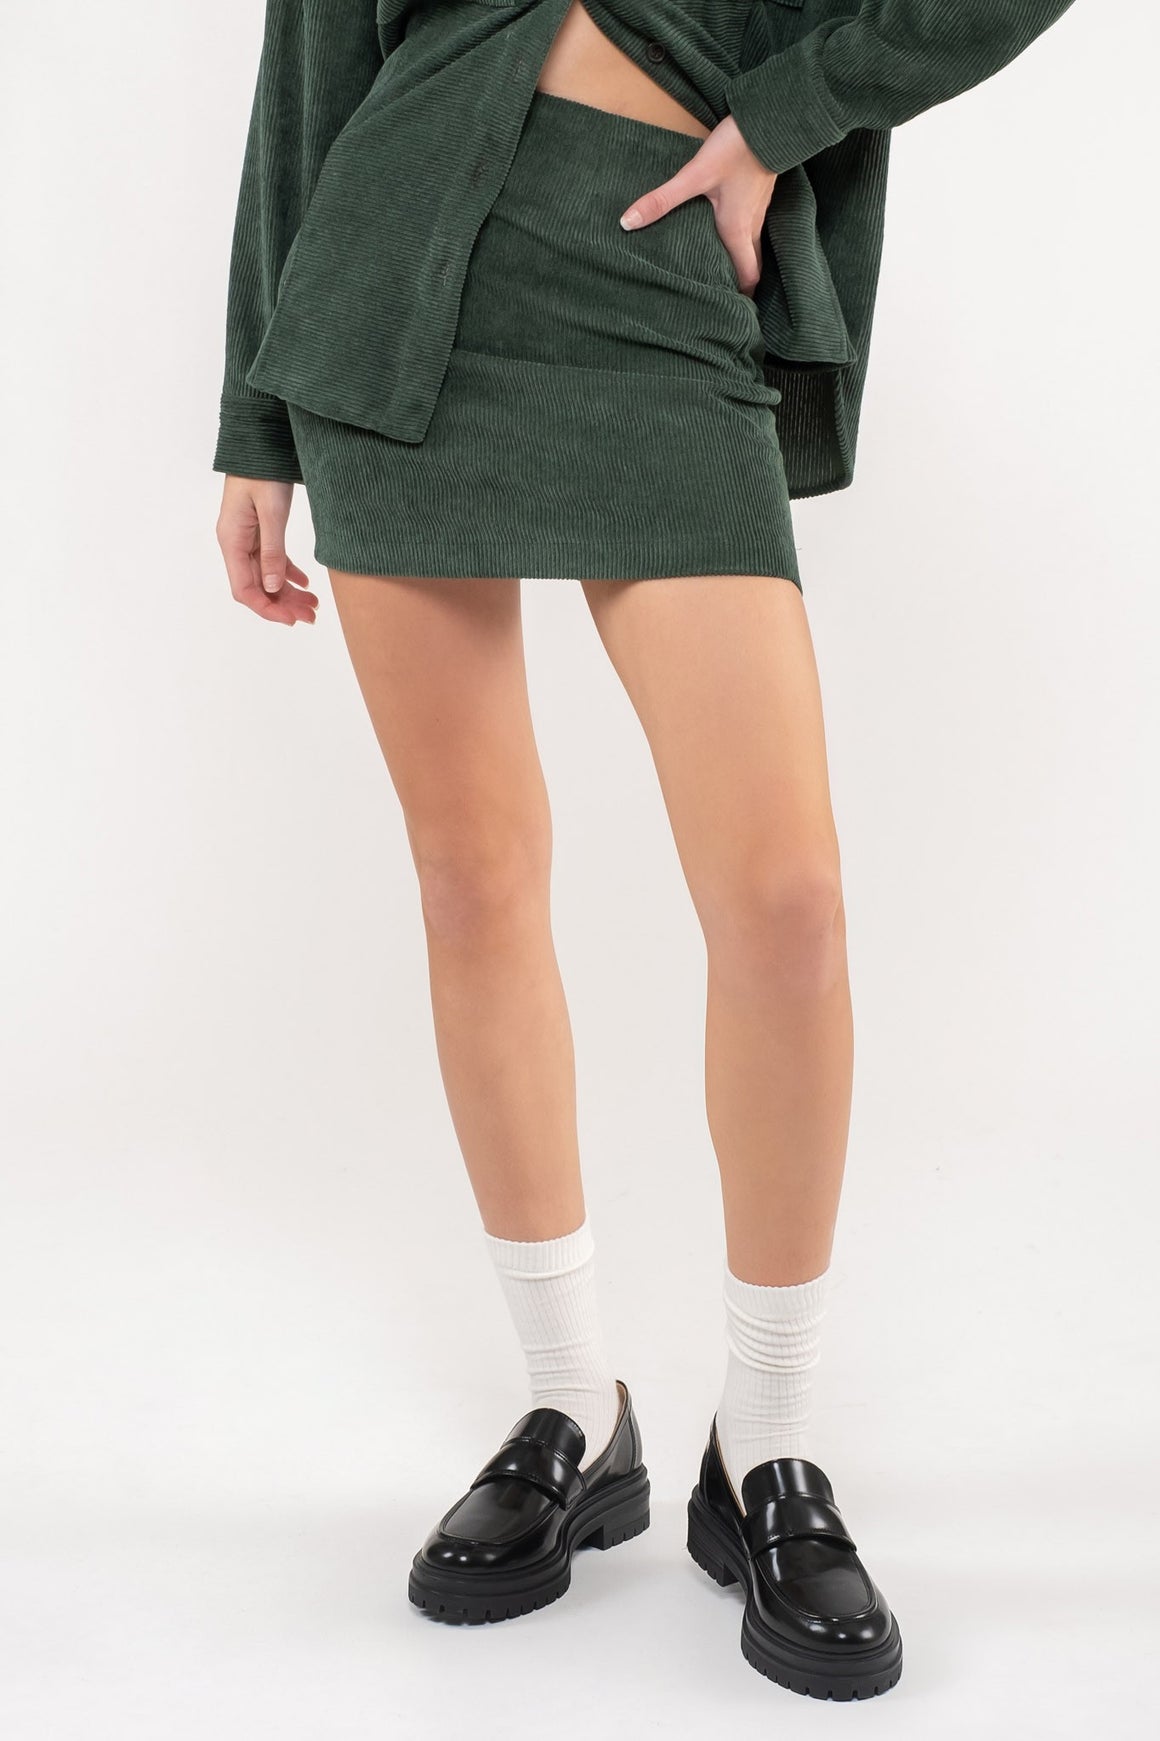 Yahara Corduroy High Waist Skirt- 3 Colors!